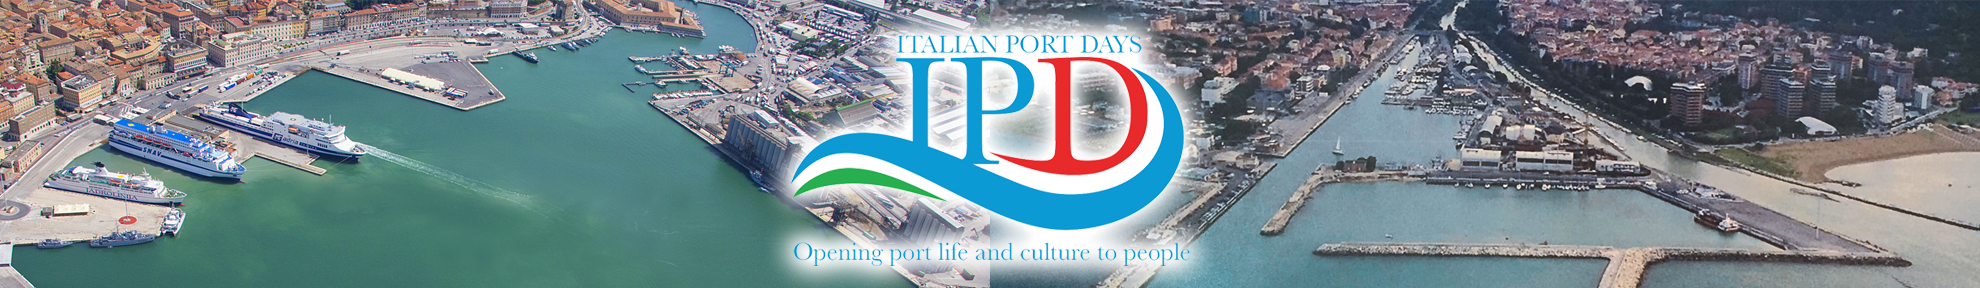 Italia Port Days